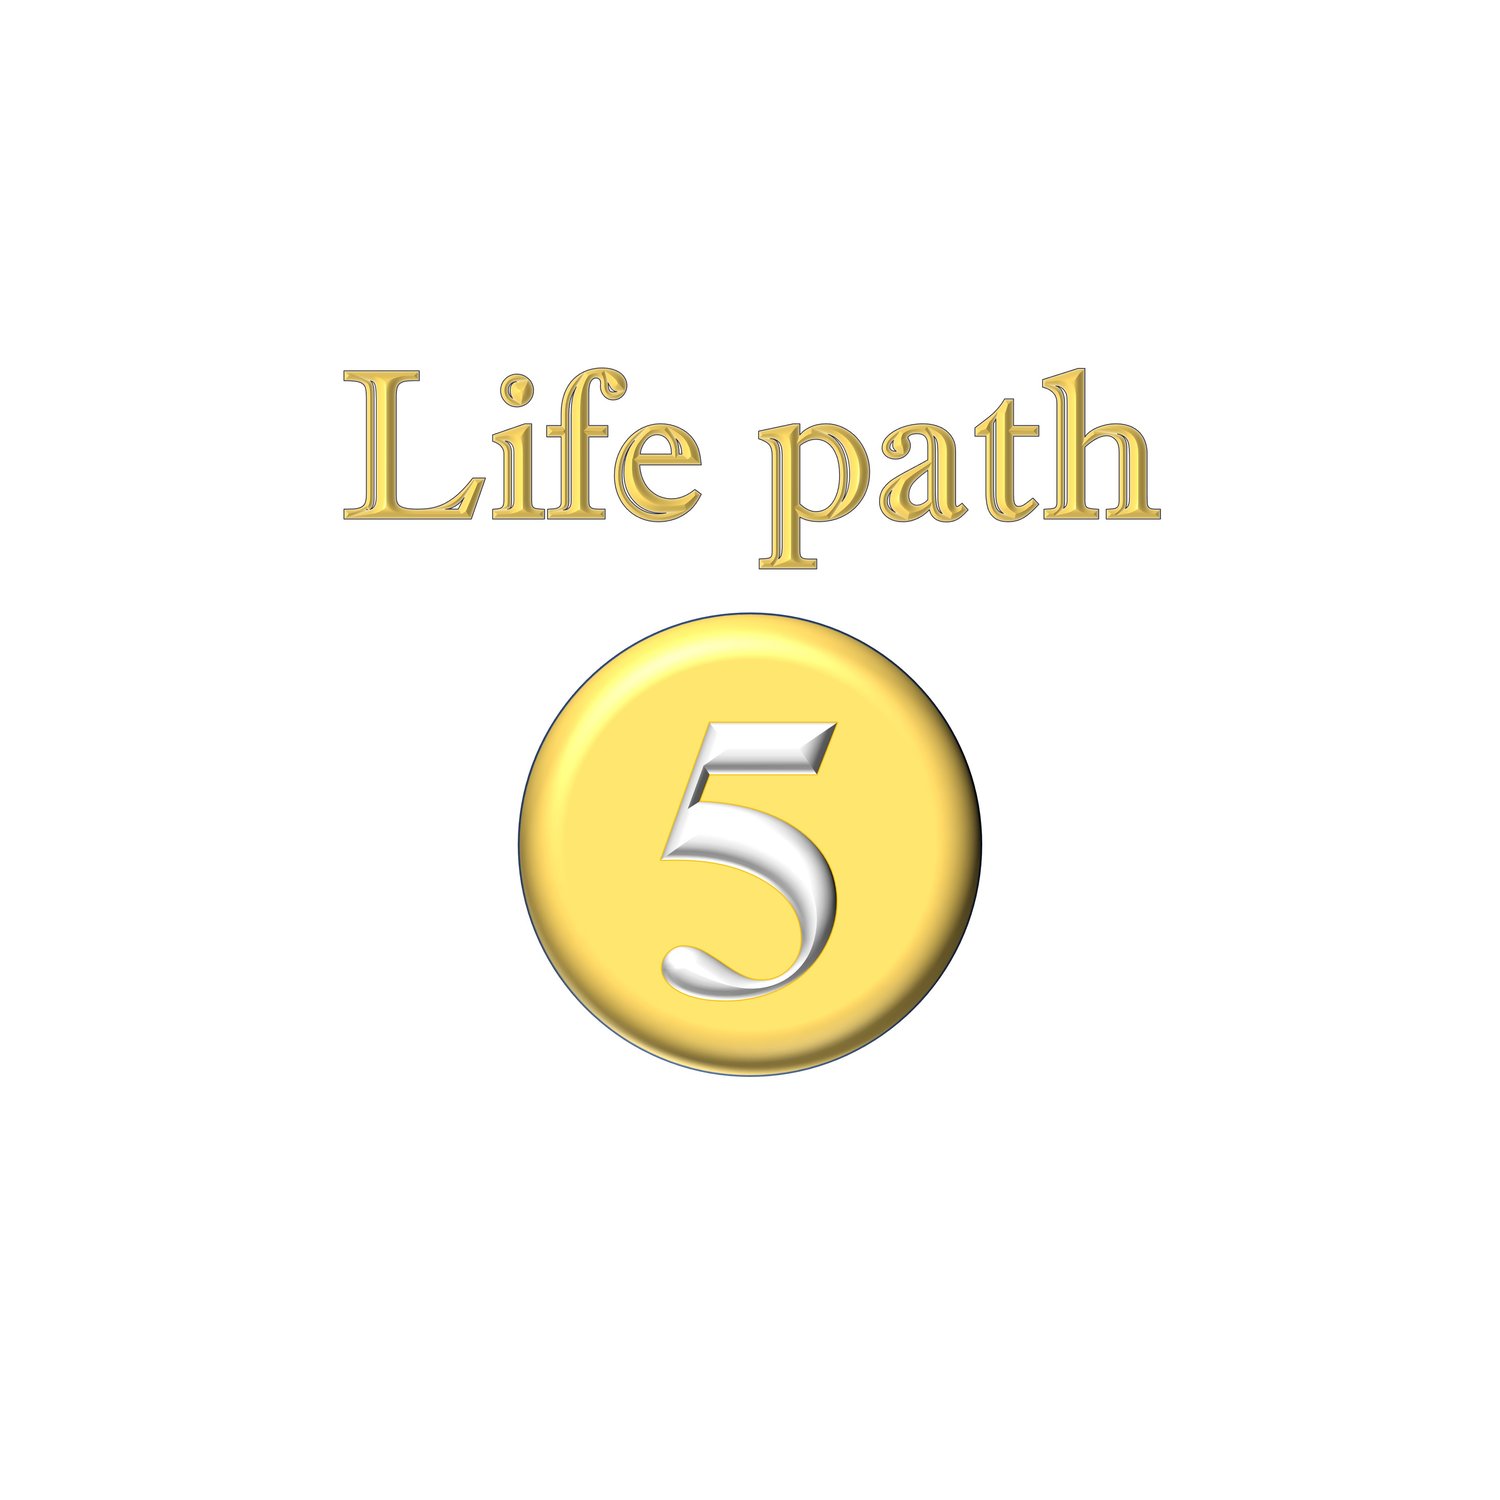 Life path 5